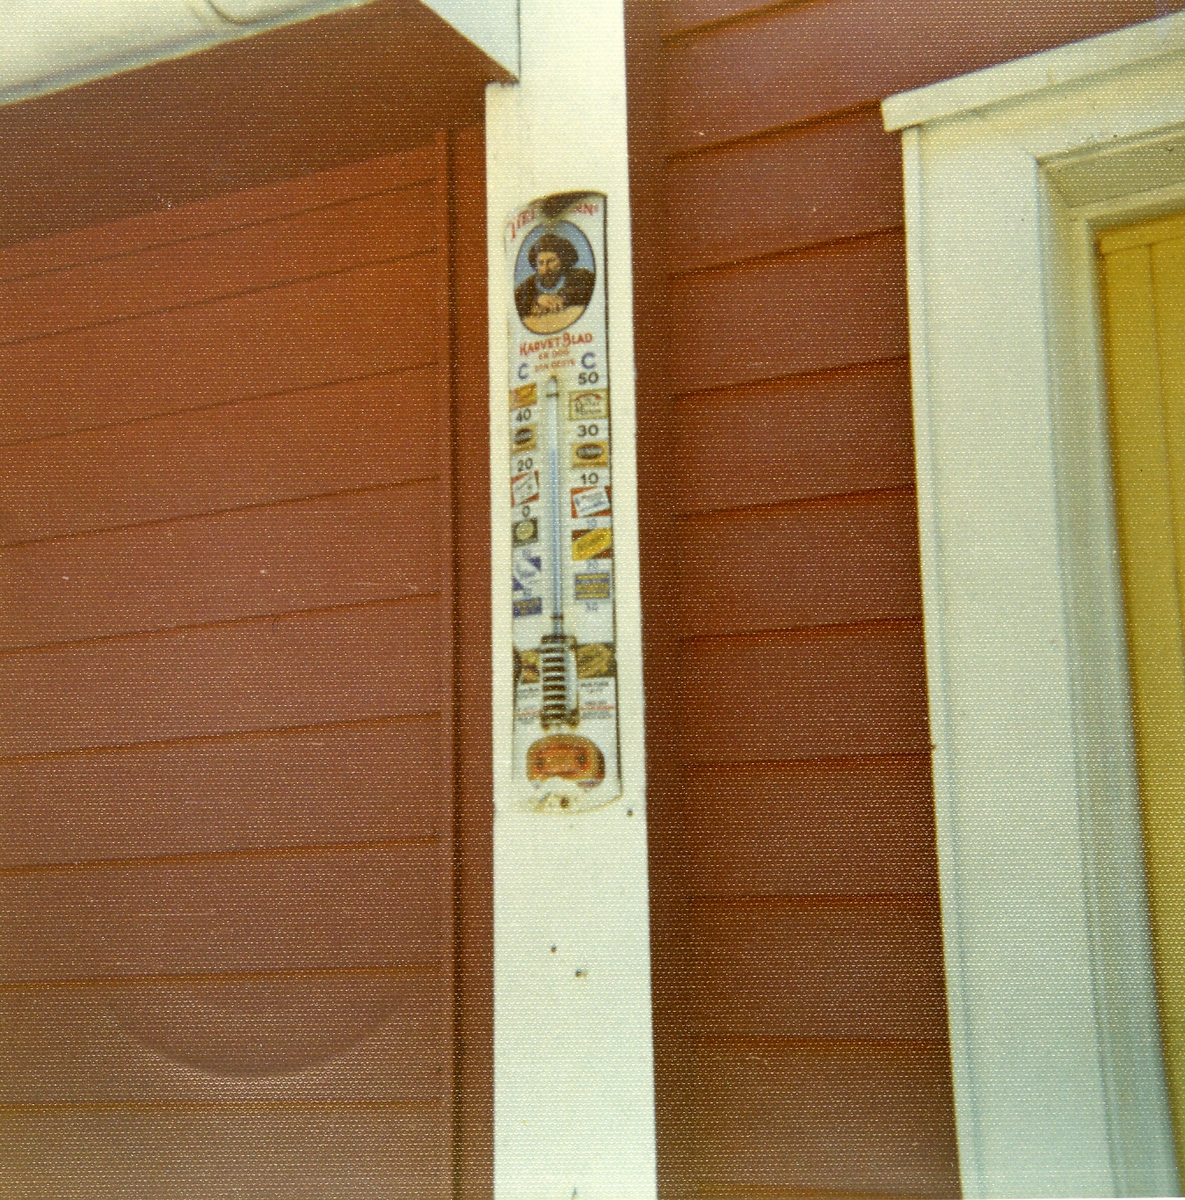 Termometer fra Tiedemann på fasade.